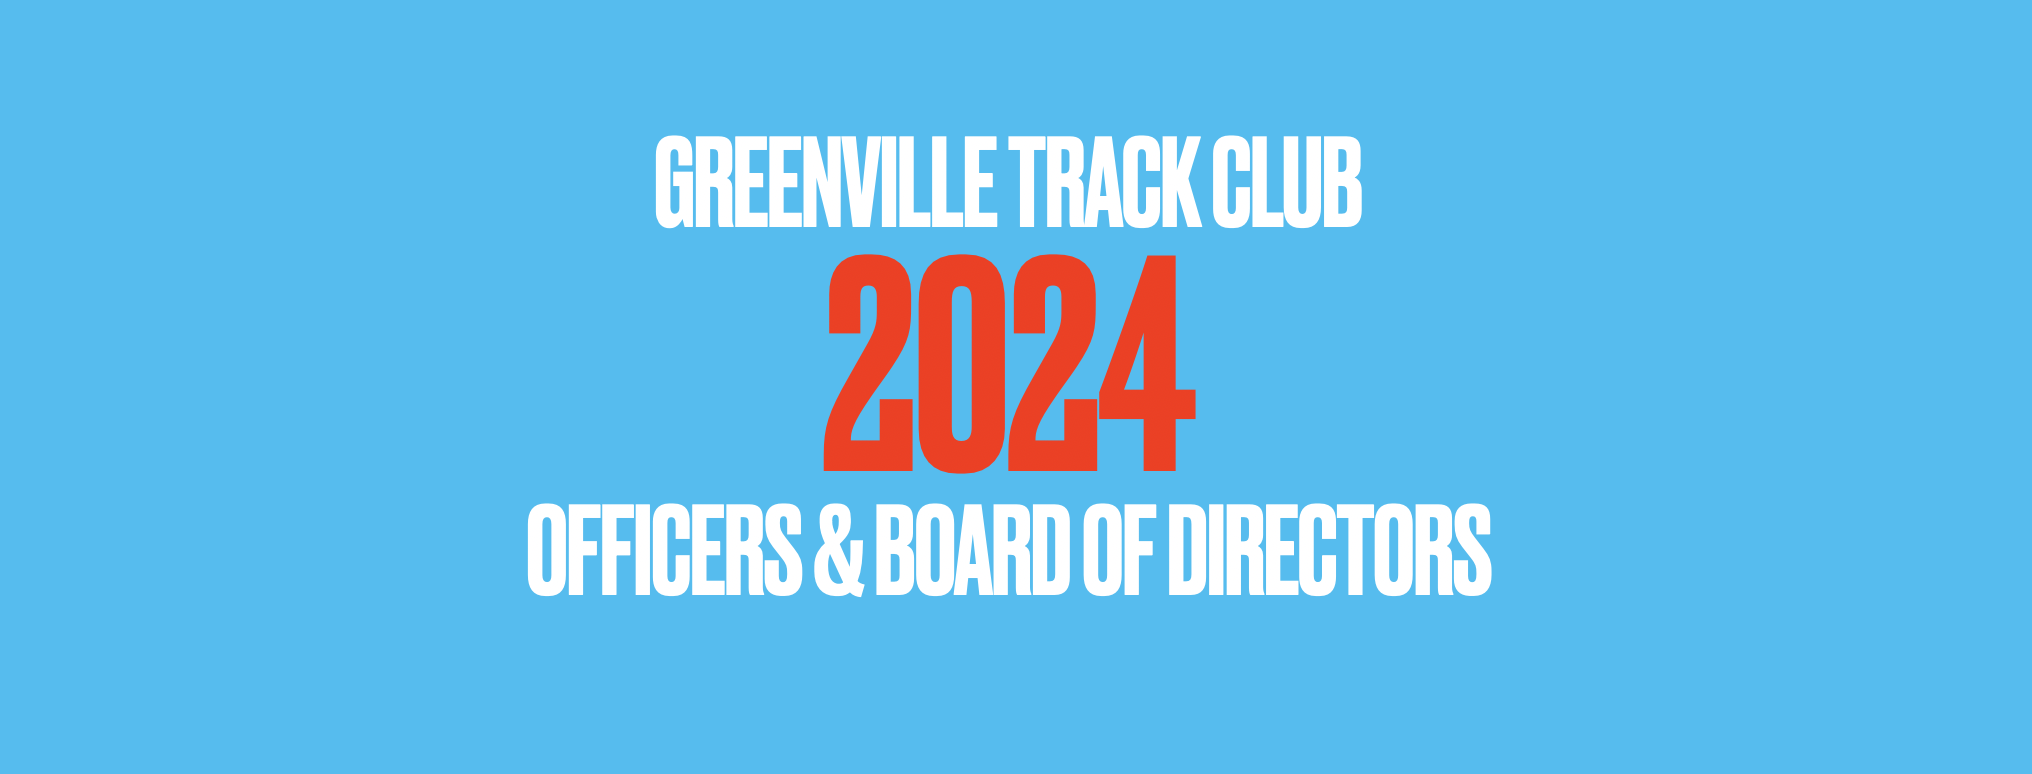 Greenville codes December 2023